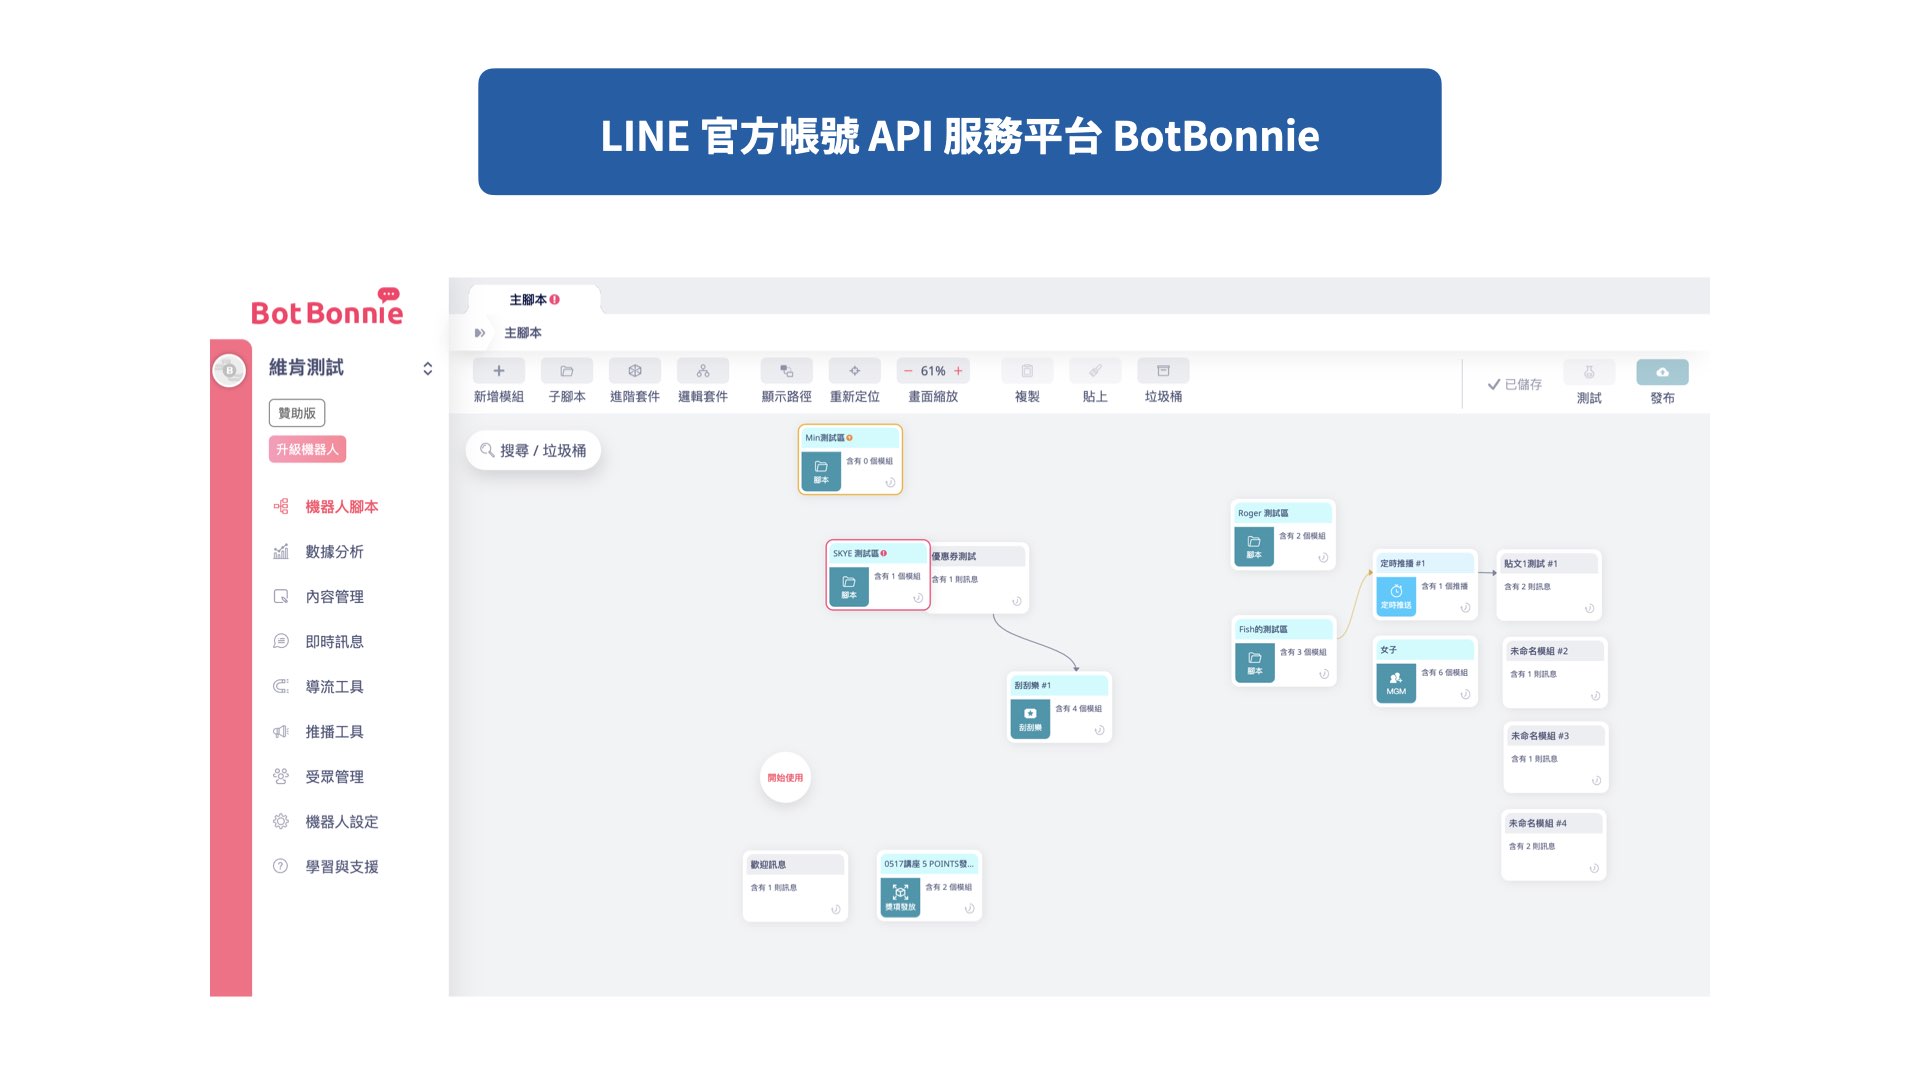 LINE官方帳號API 服務平台 BotBonnie